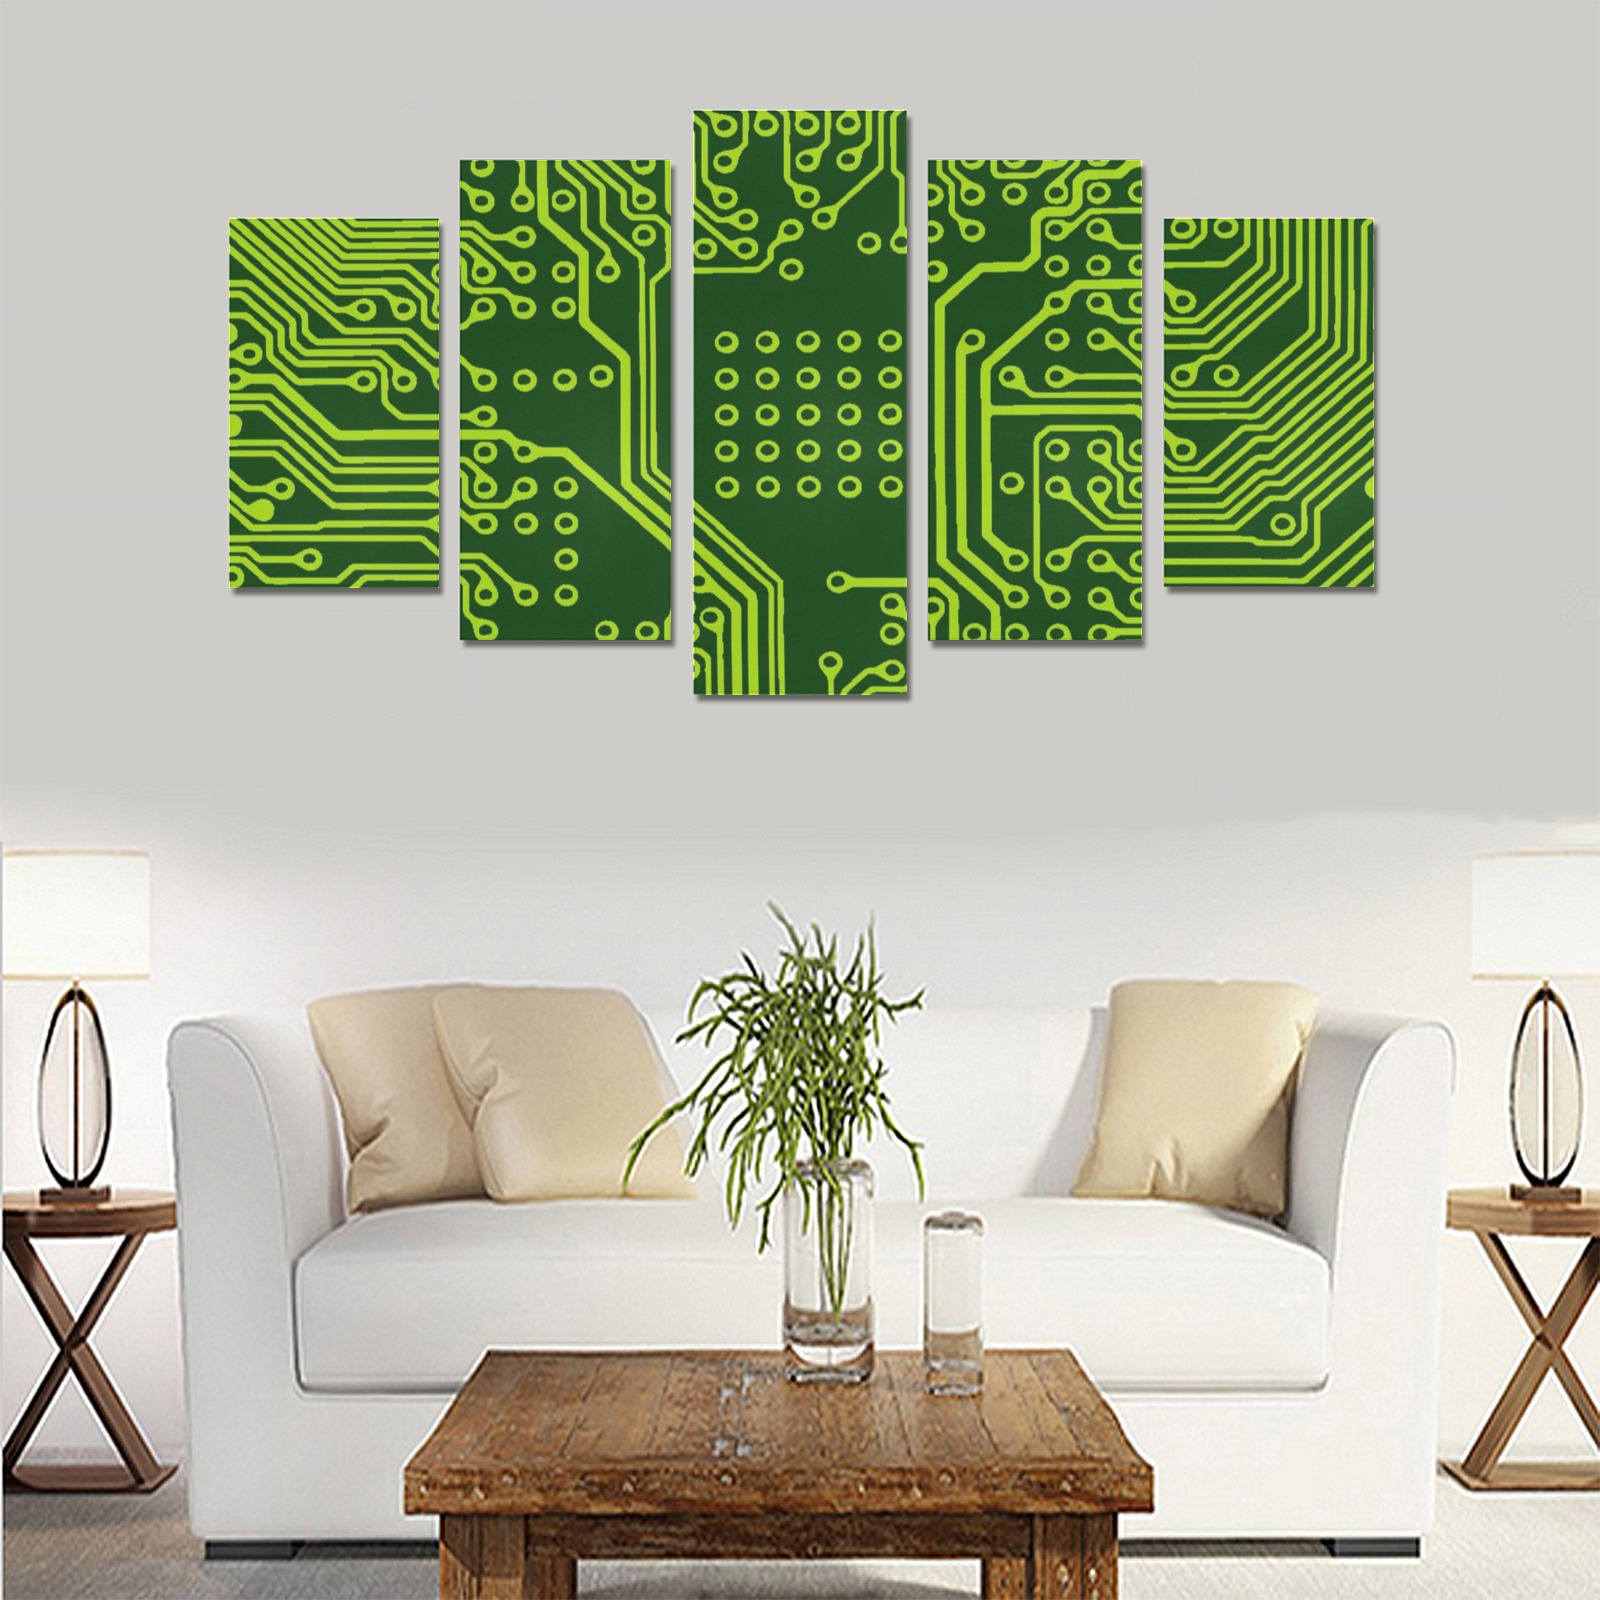 Computer Age (Circuit Board) 9 Canvas Print Sets A (No Frame)